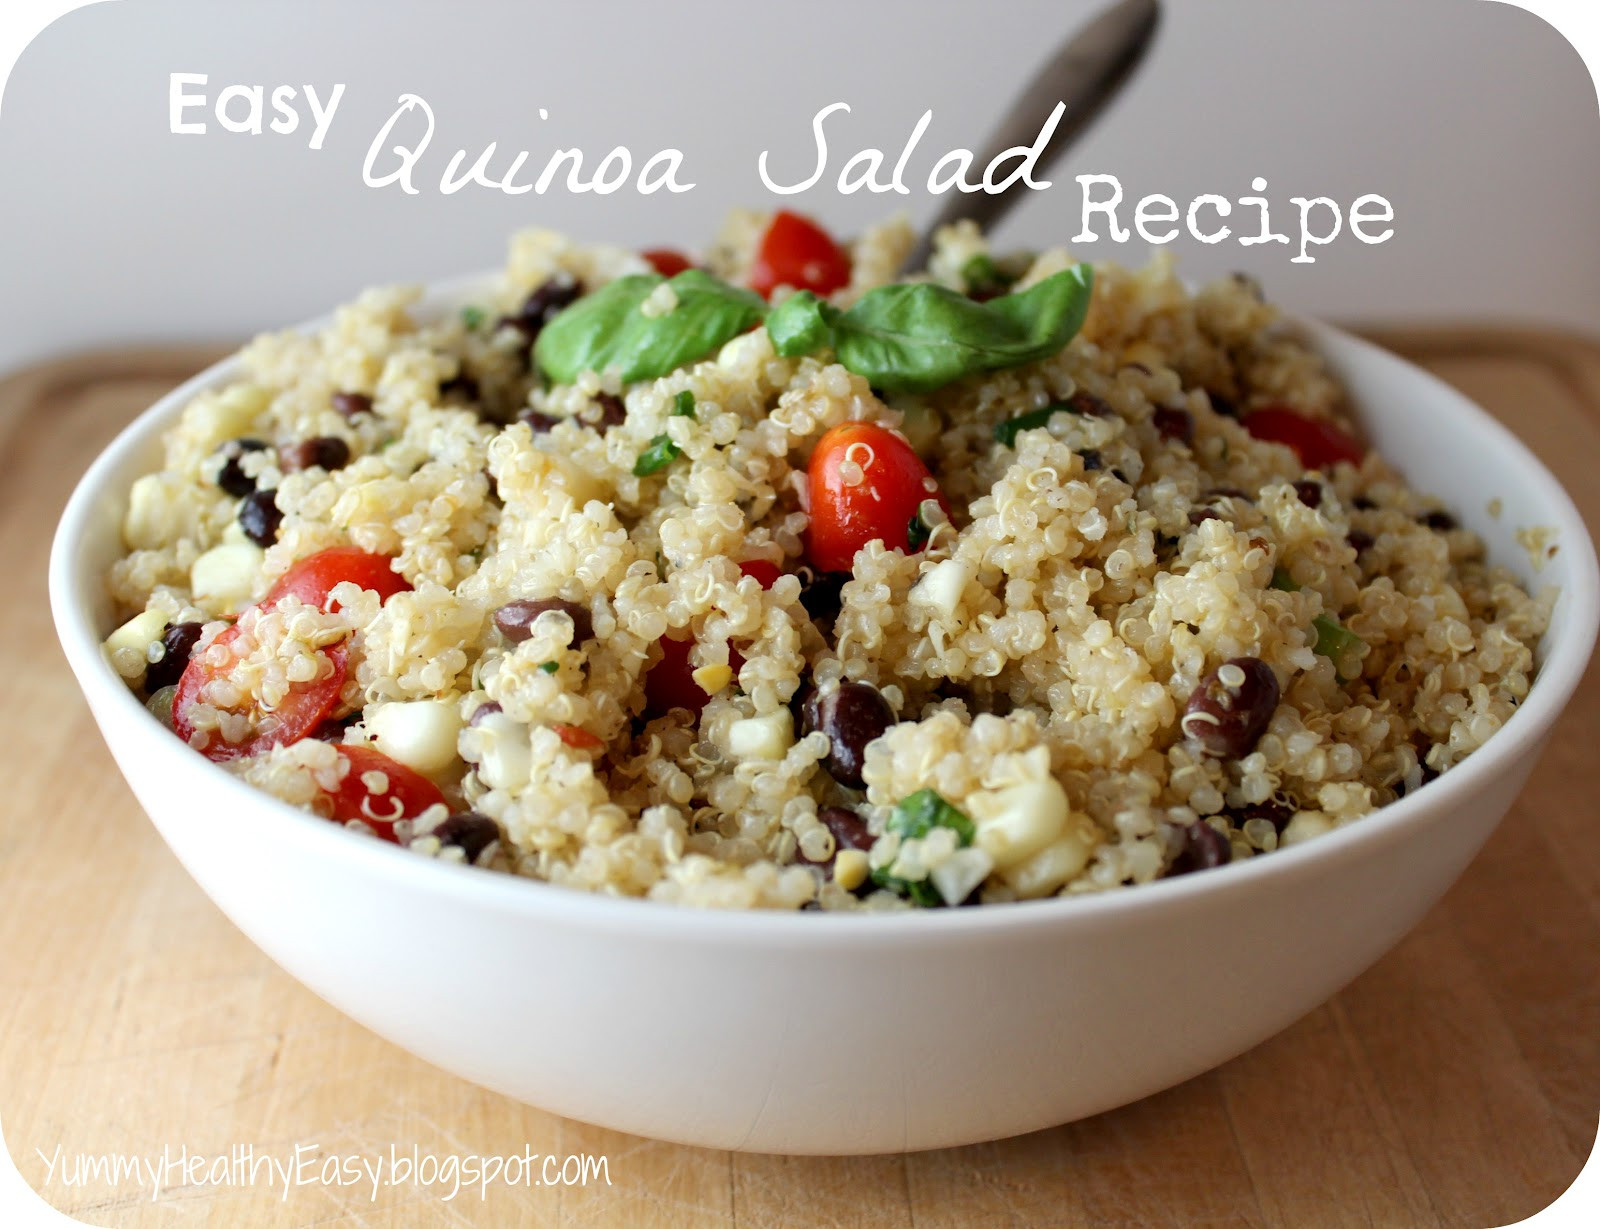 Easy Healthy Quinoa Recipes
 The Perfect Side Dish Easy Quinoa Salad Recipe Yummy